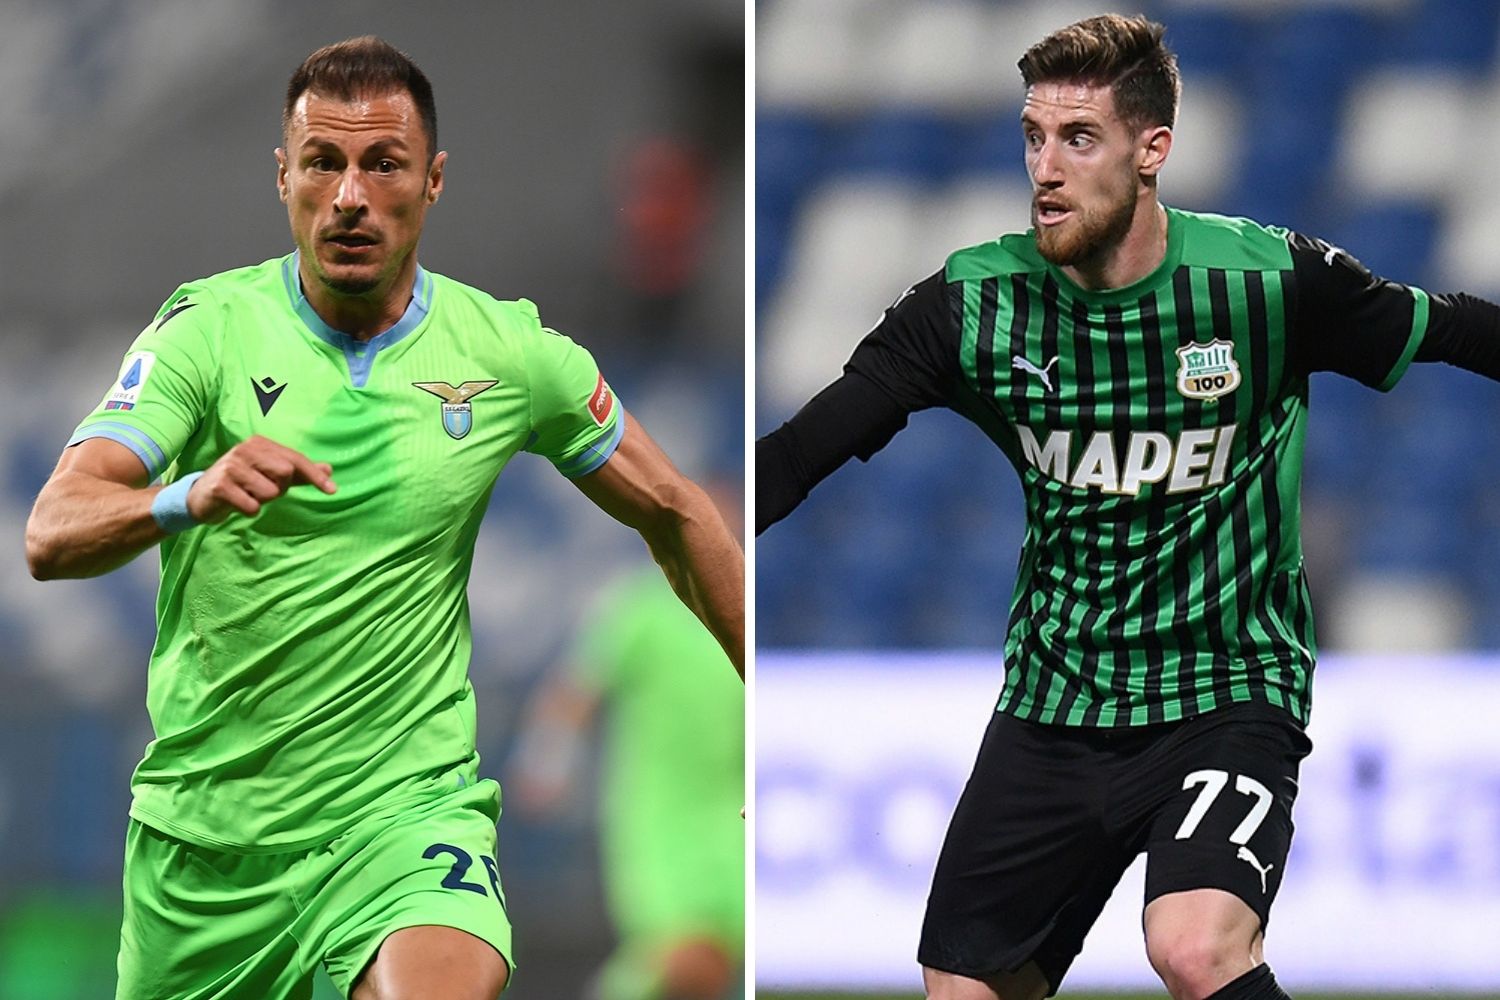 Série A italiana vai proibir uniformes verdes a partir de 2022